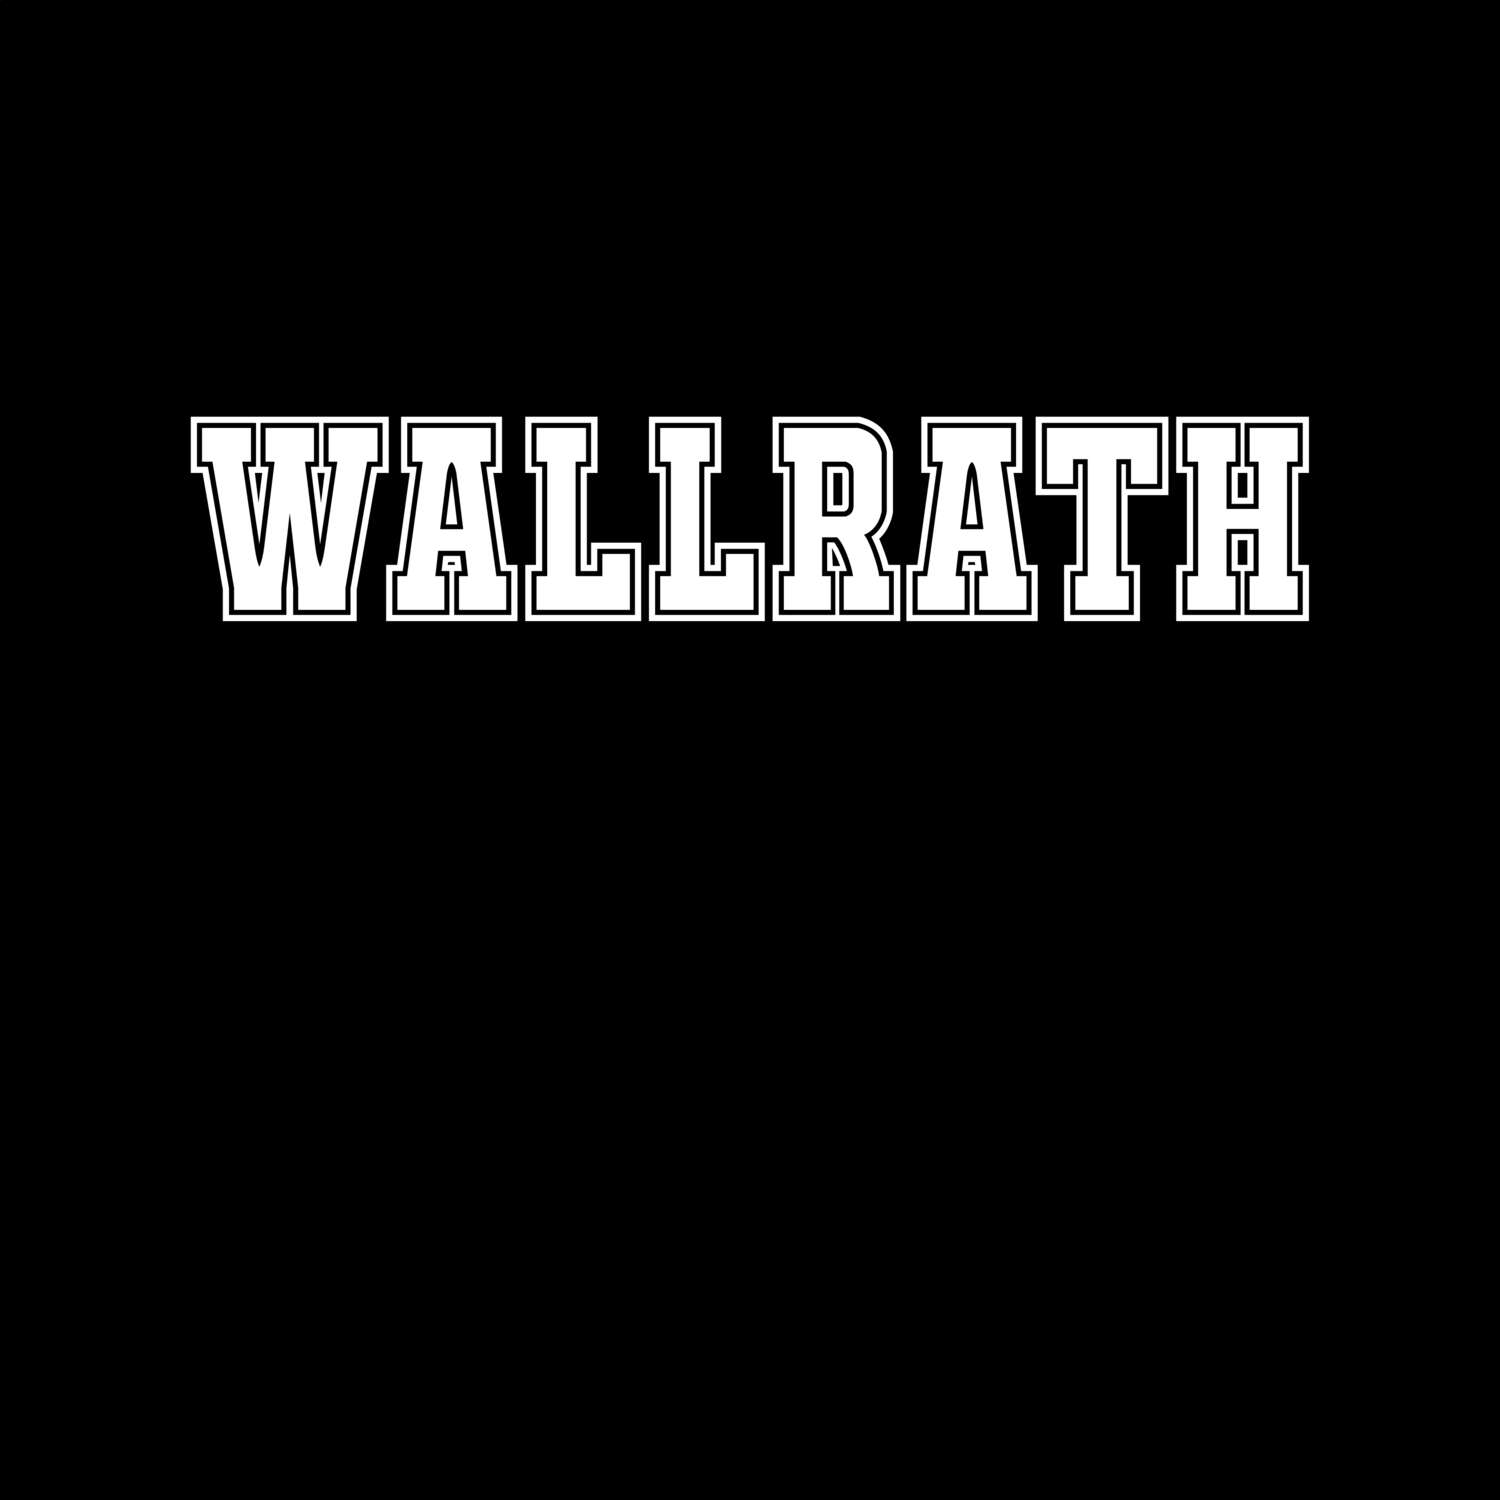 Wallrath T-Shirt »Classic«